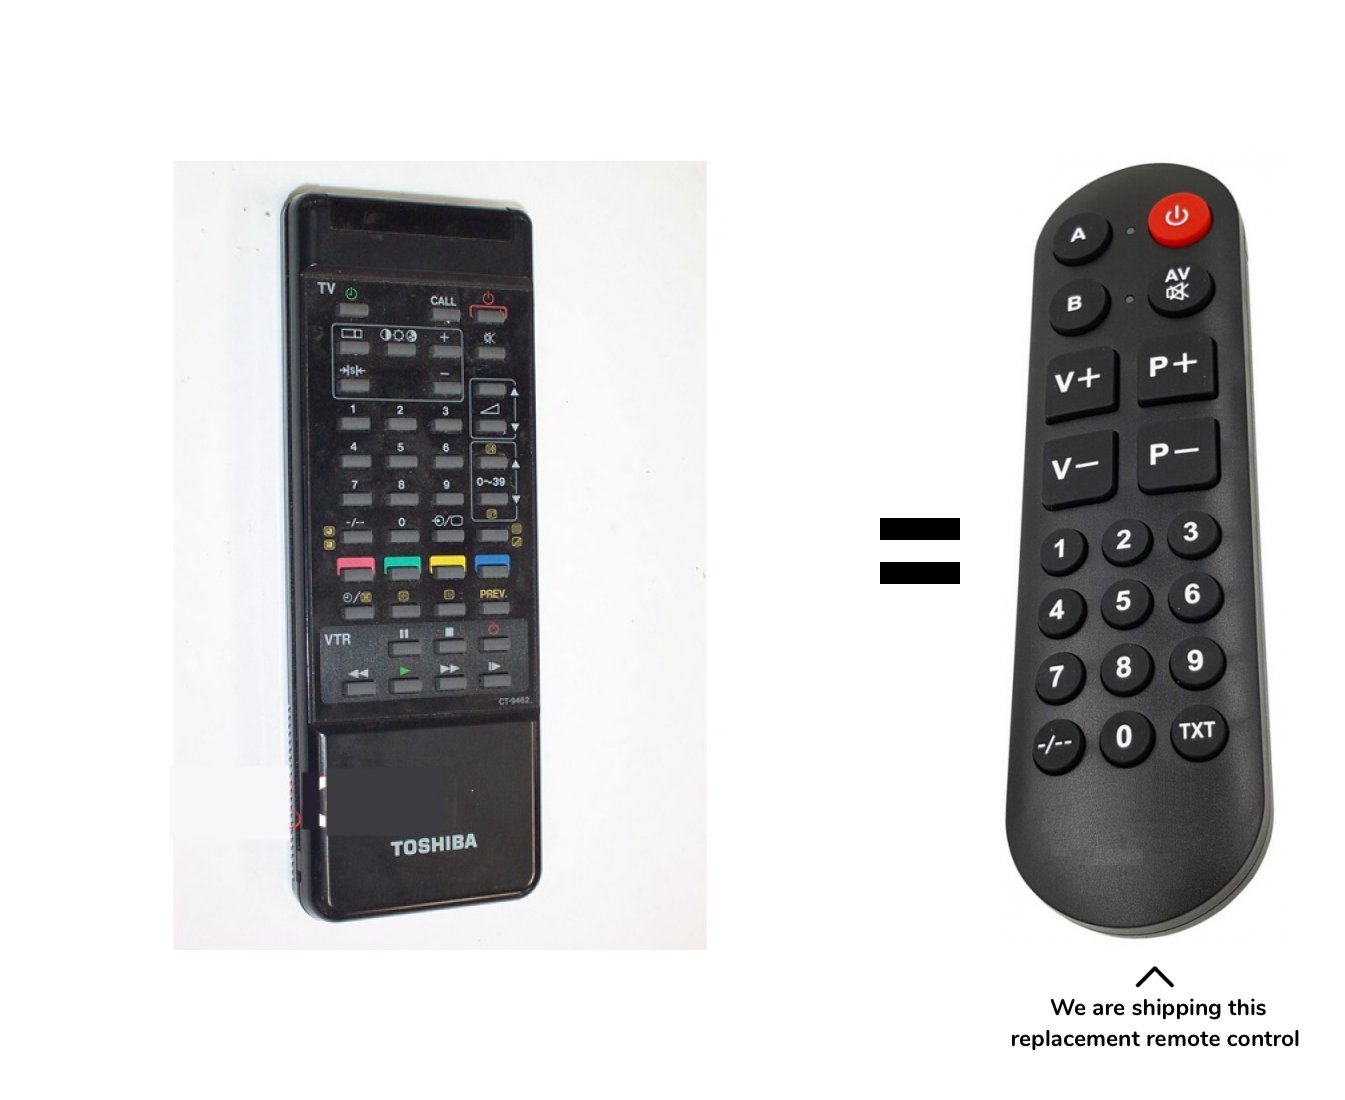 Toshiba 2500TD–25 remote control for seniors